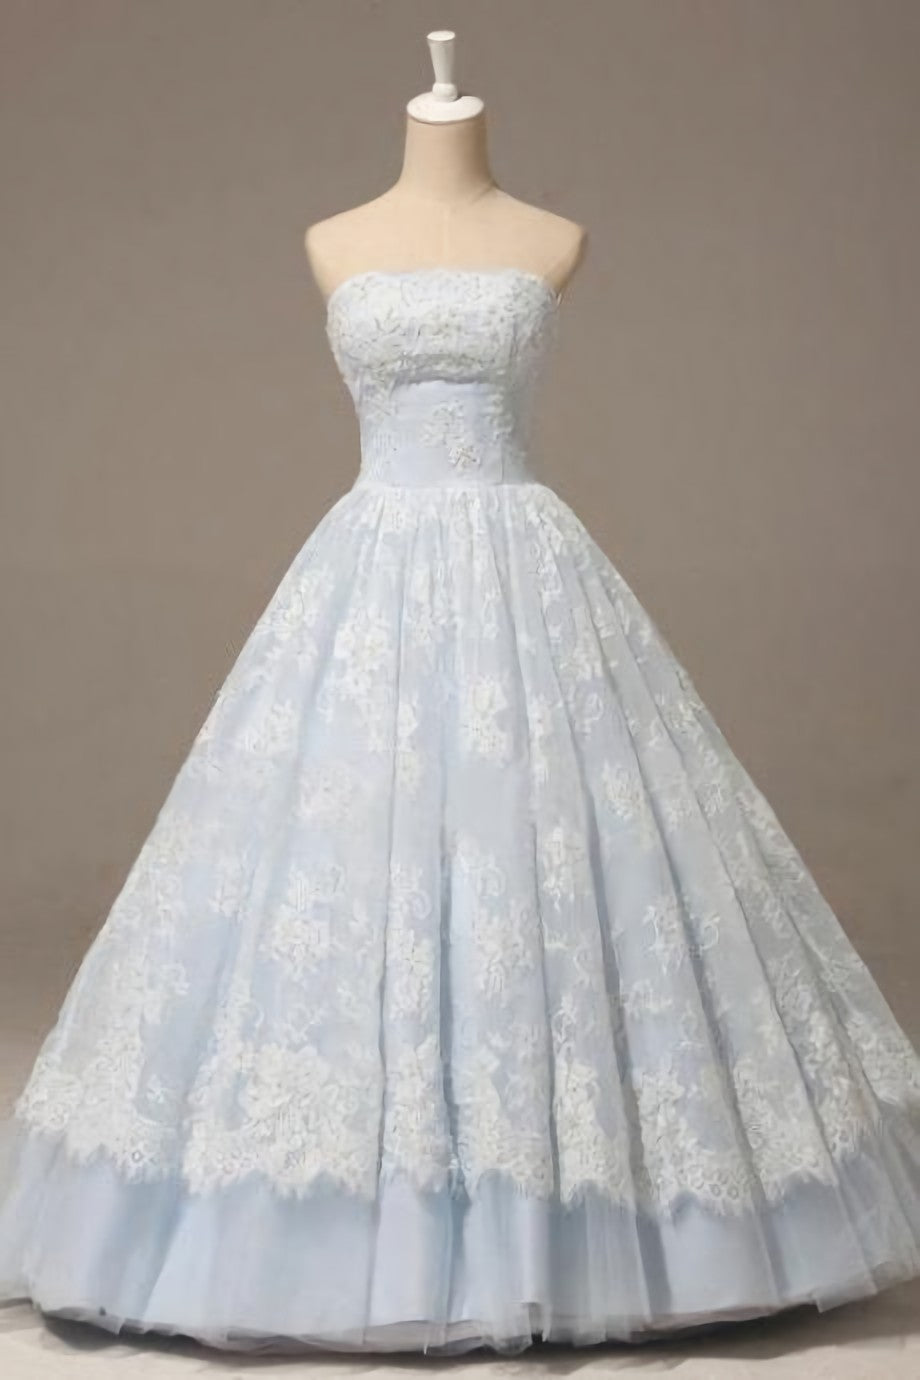 Light Blue Organza Lace Sweetheart A Line Long Prom Dress, Princess Ball Gown Dress